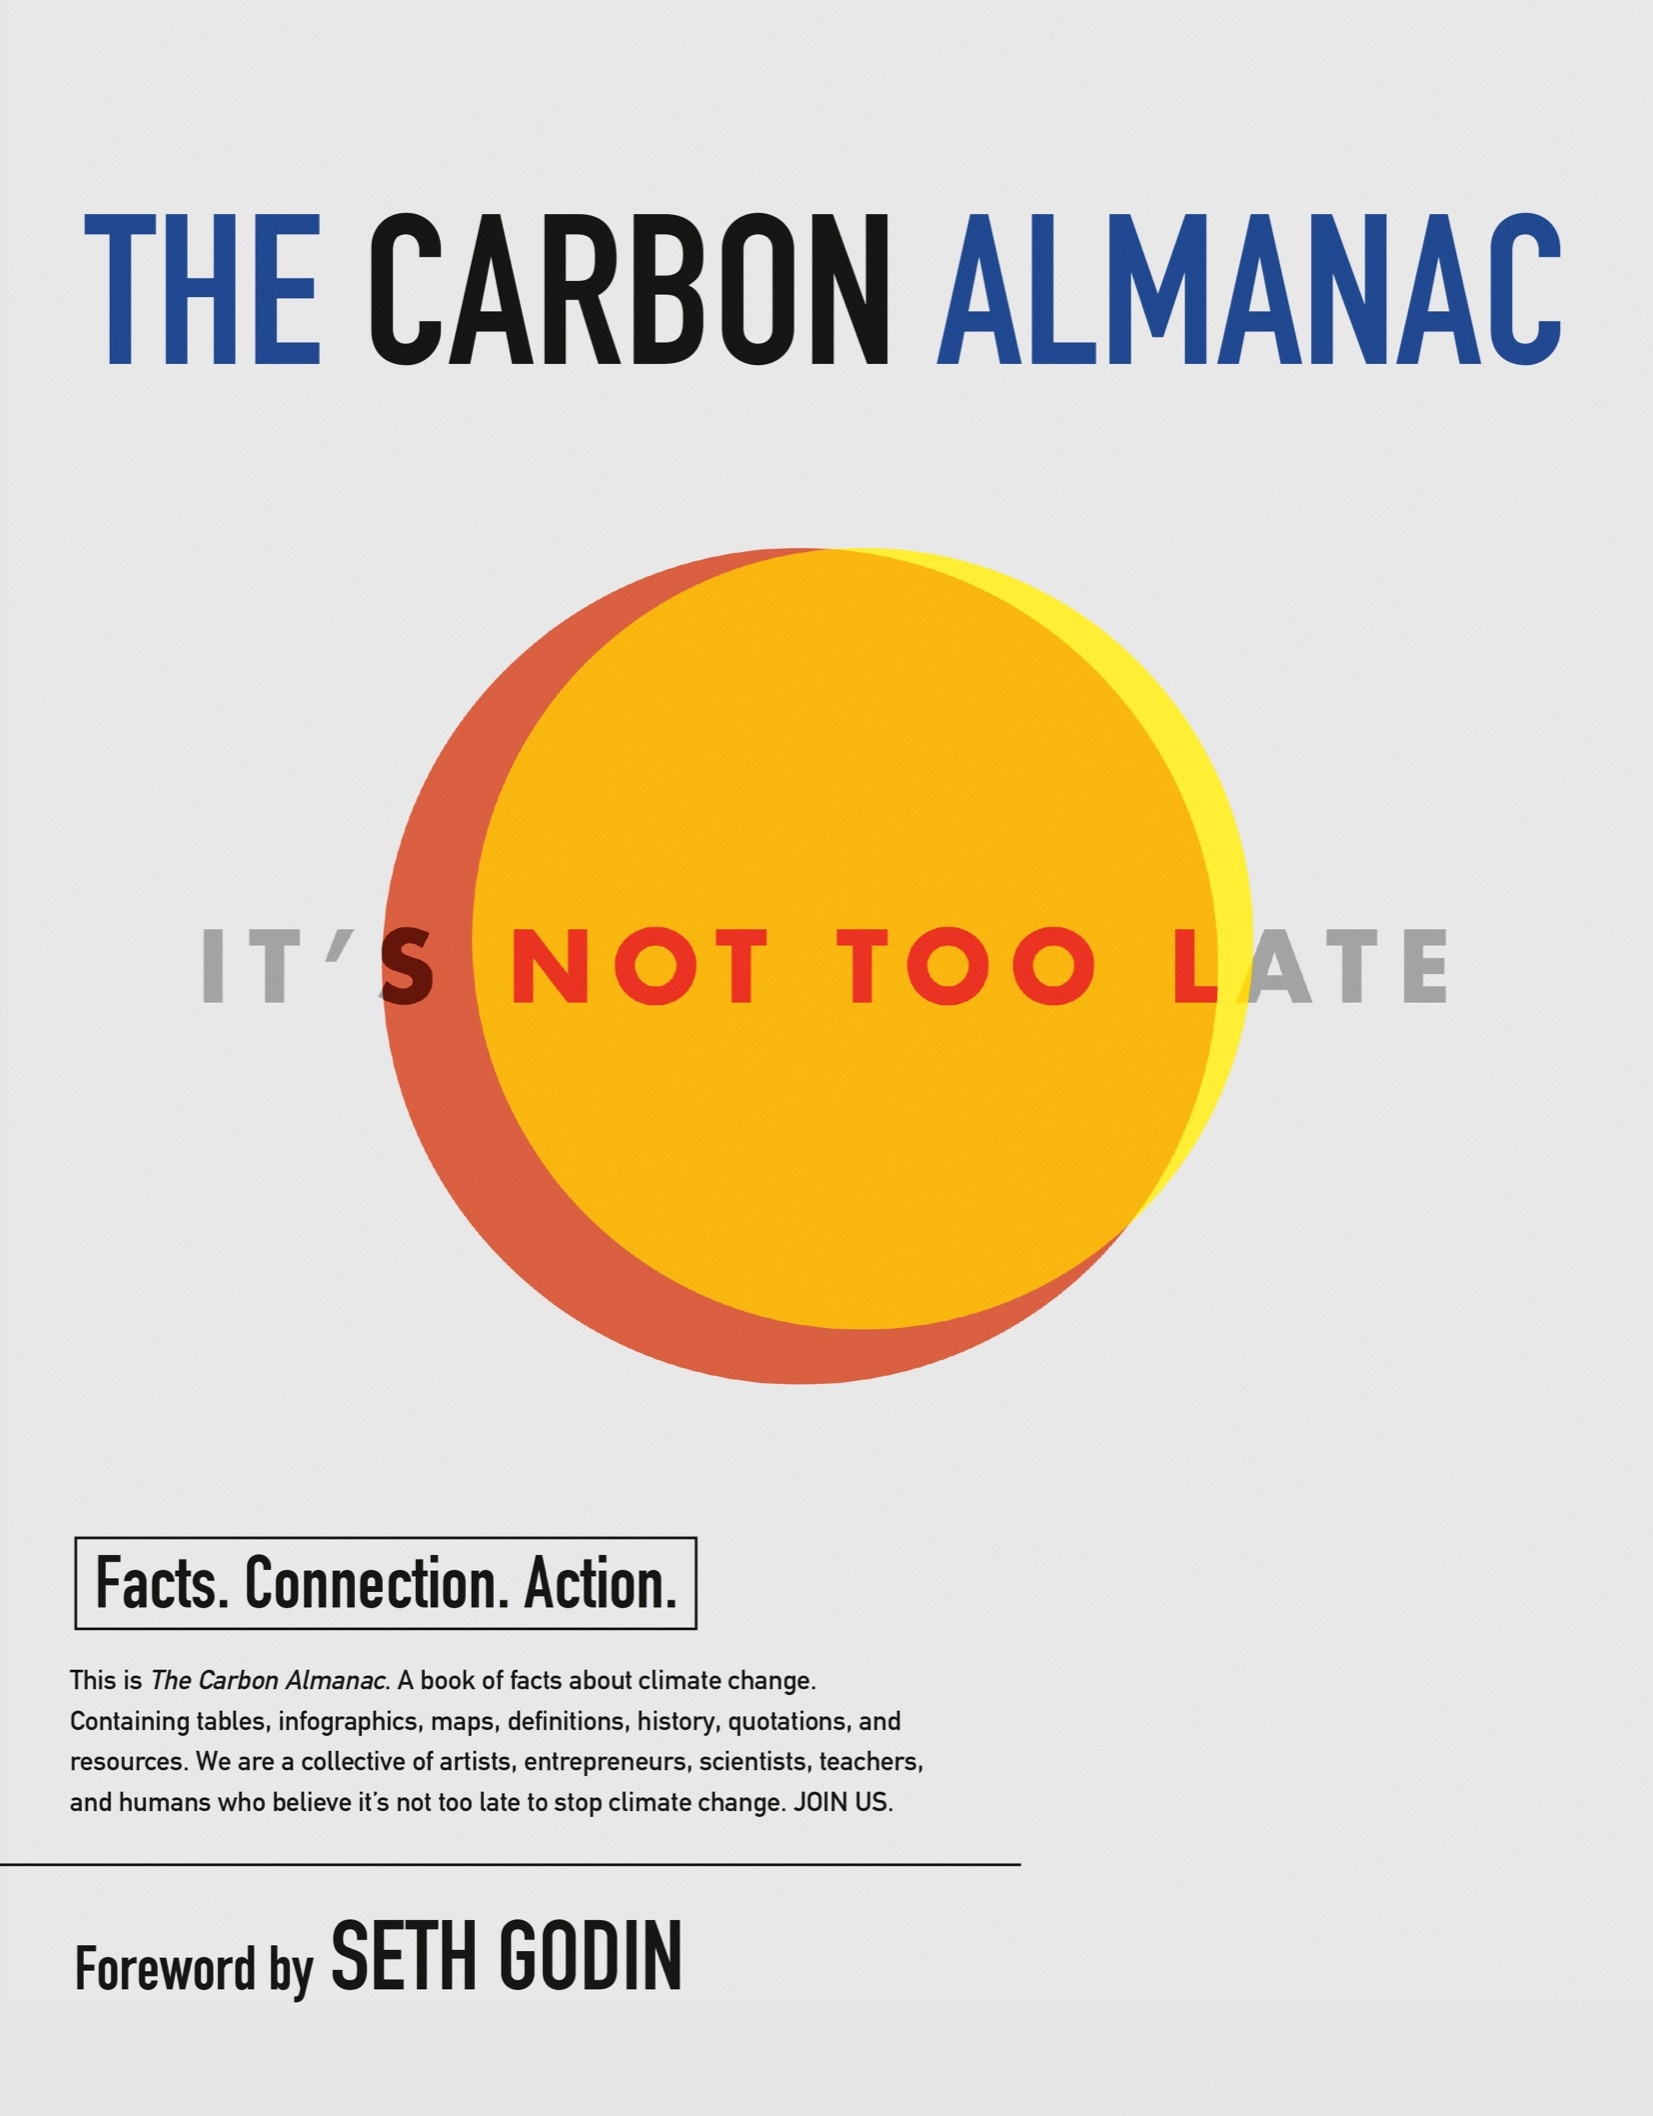 The Carbon Almanac Network, Seth Godin: Carbon Almanac (2022, Penguin Publishing Group)